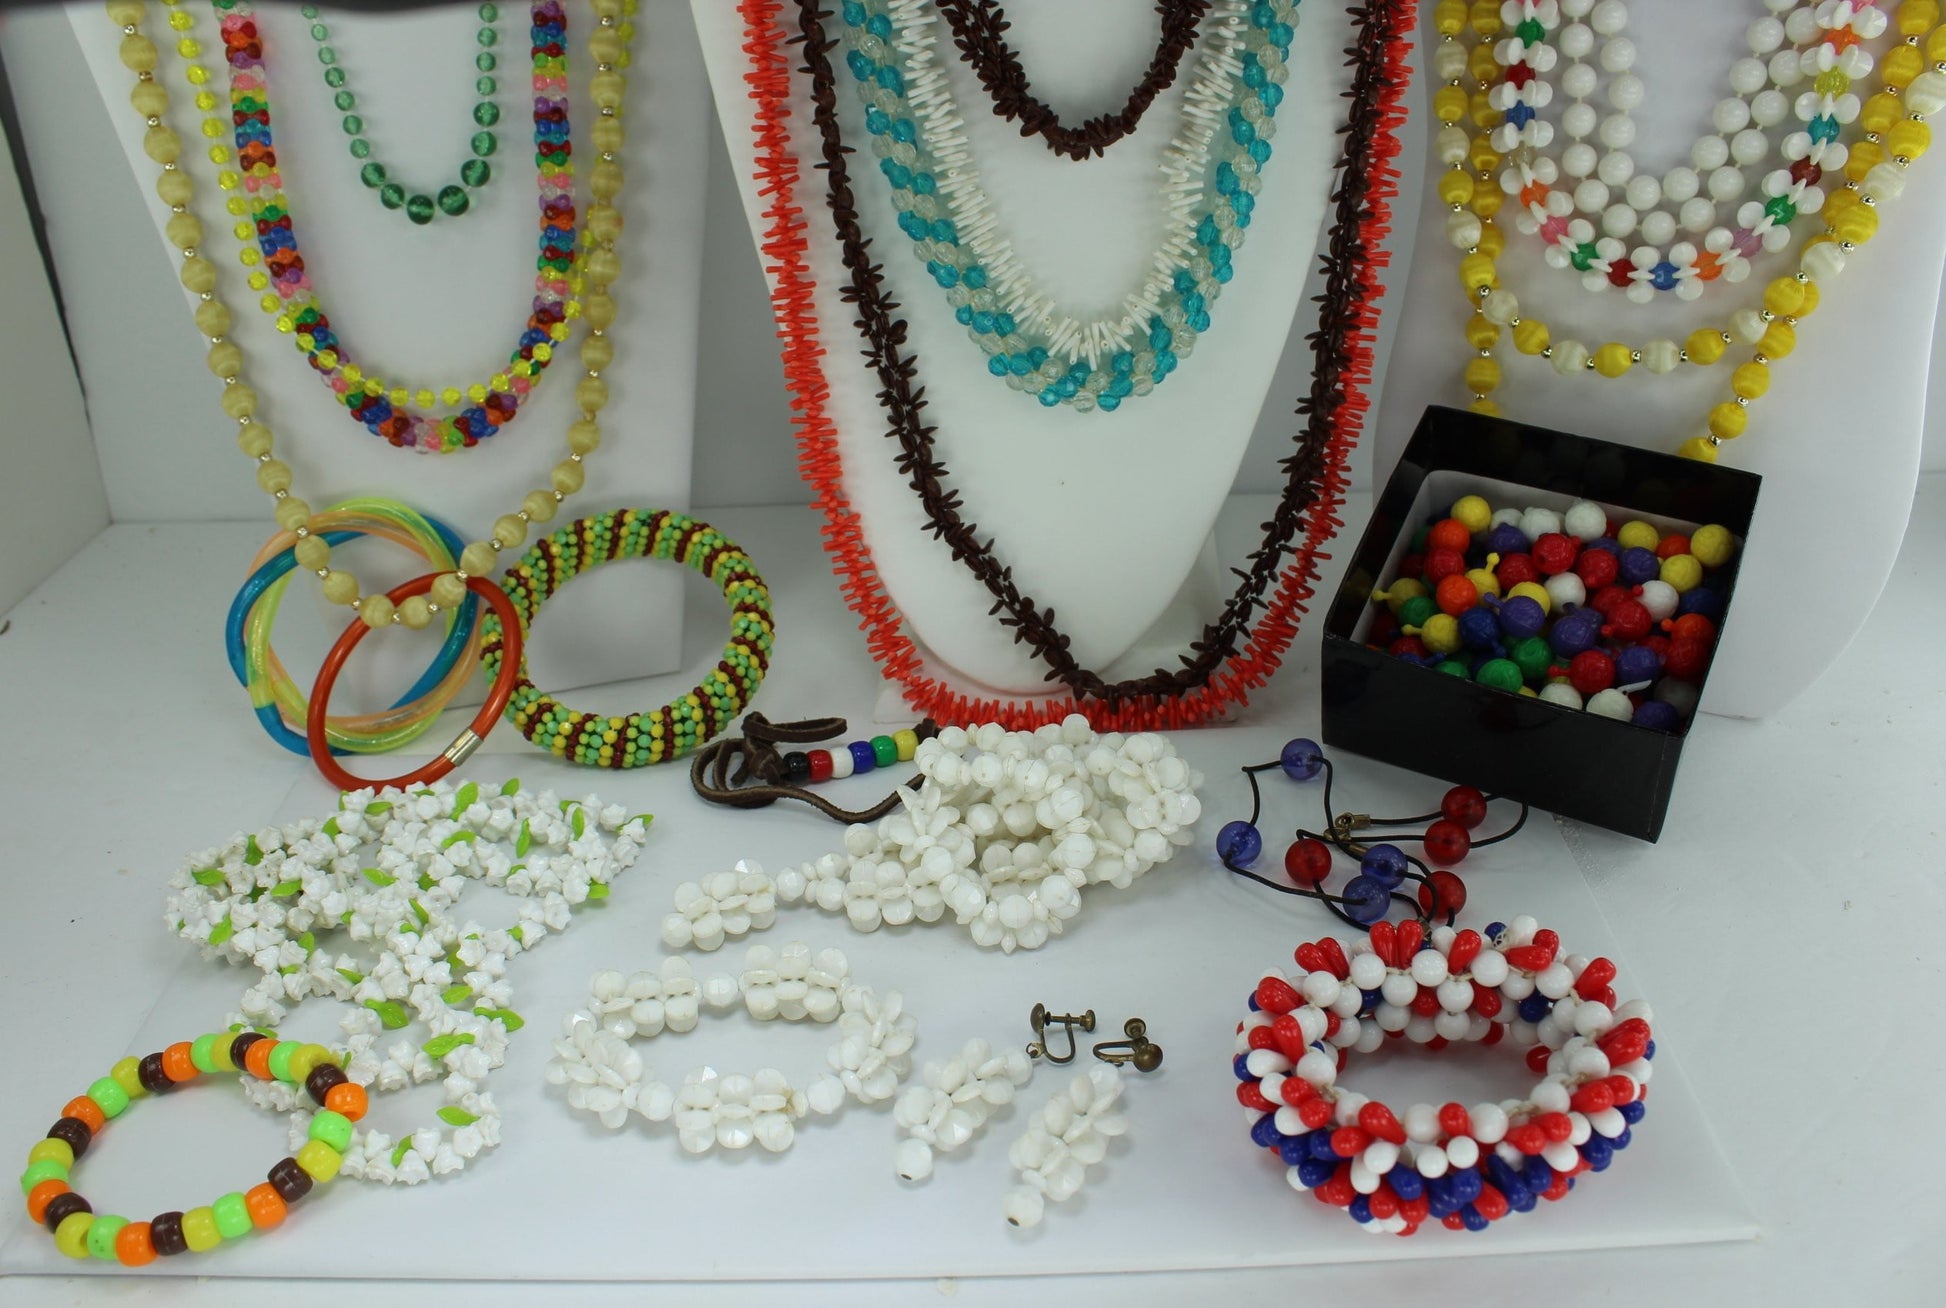 Retro Plastic Jewelry Fun Lot 25 Pieces plus Pop Beads Flower Necklace Beads Hippie Boho Party supplies